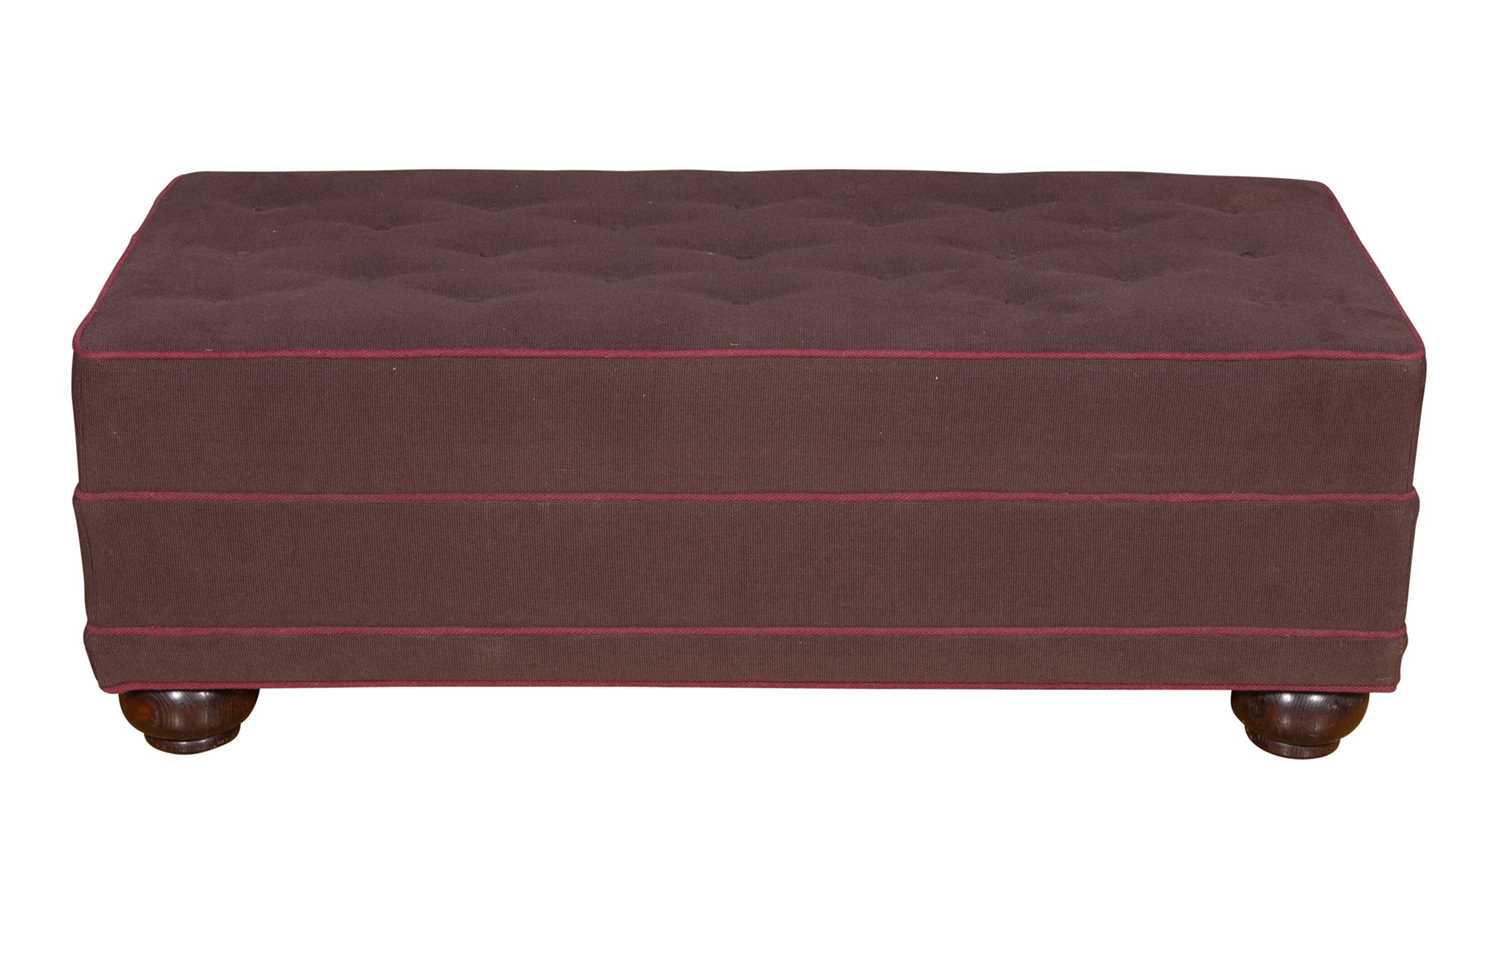 Lot 149 - Upholstered Ottoman